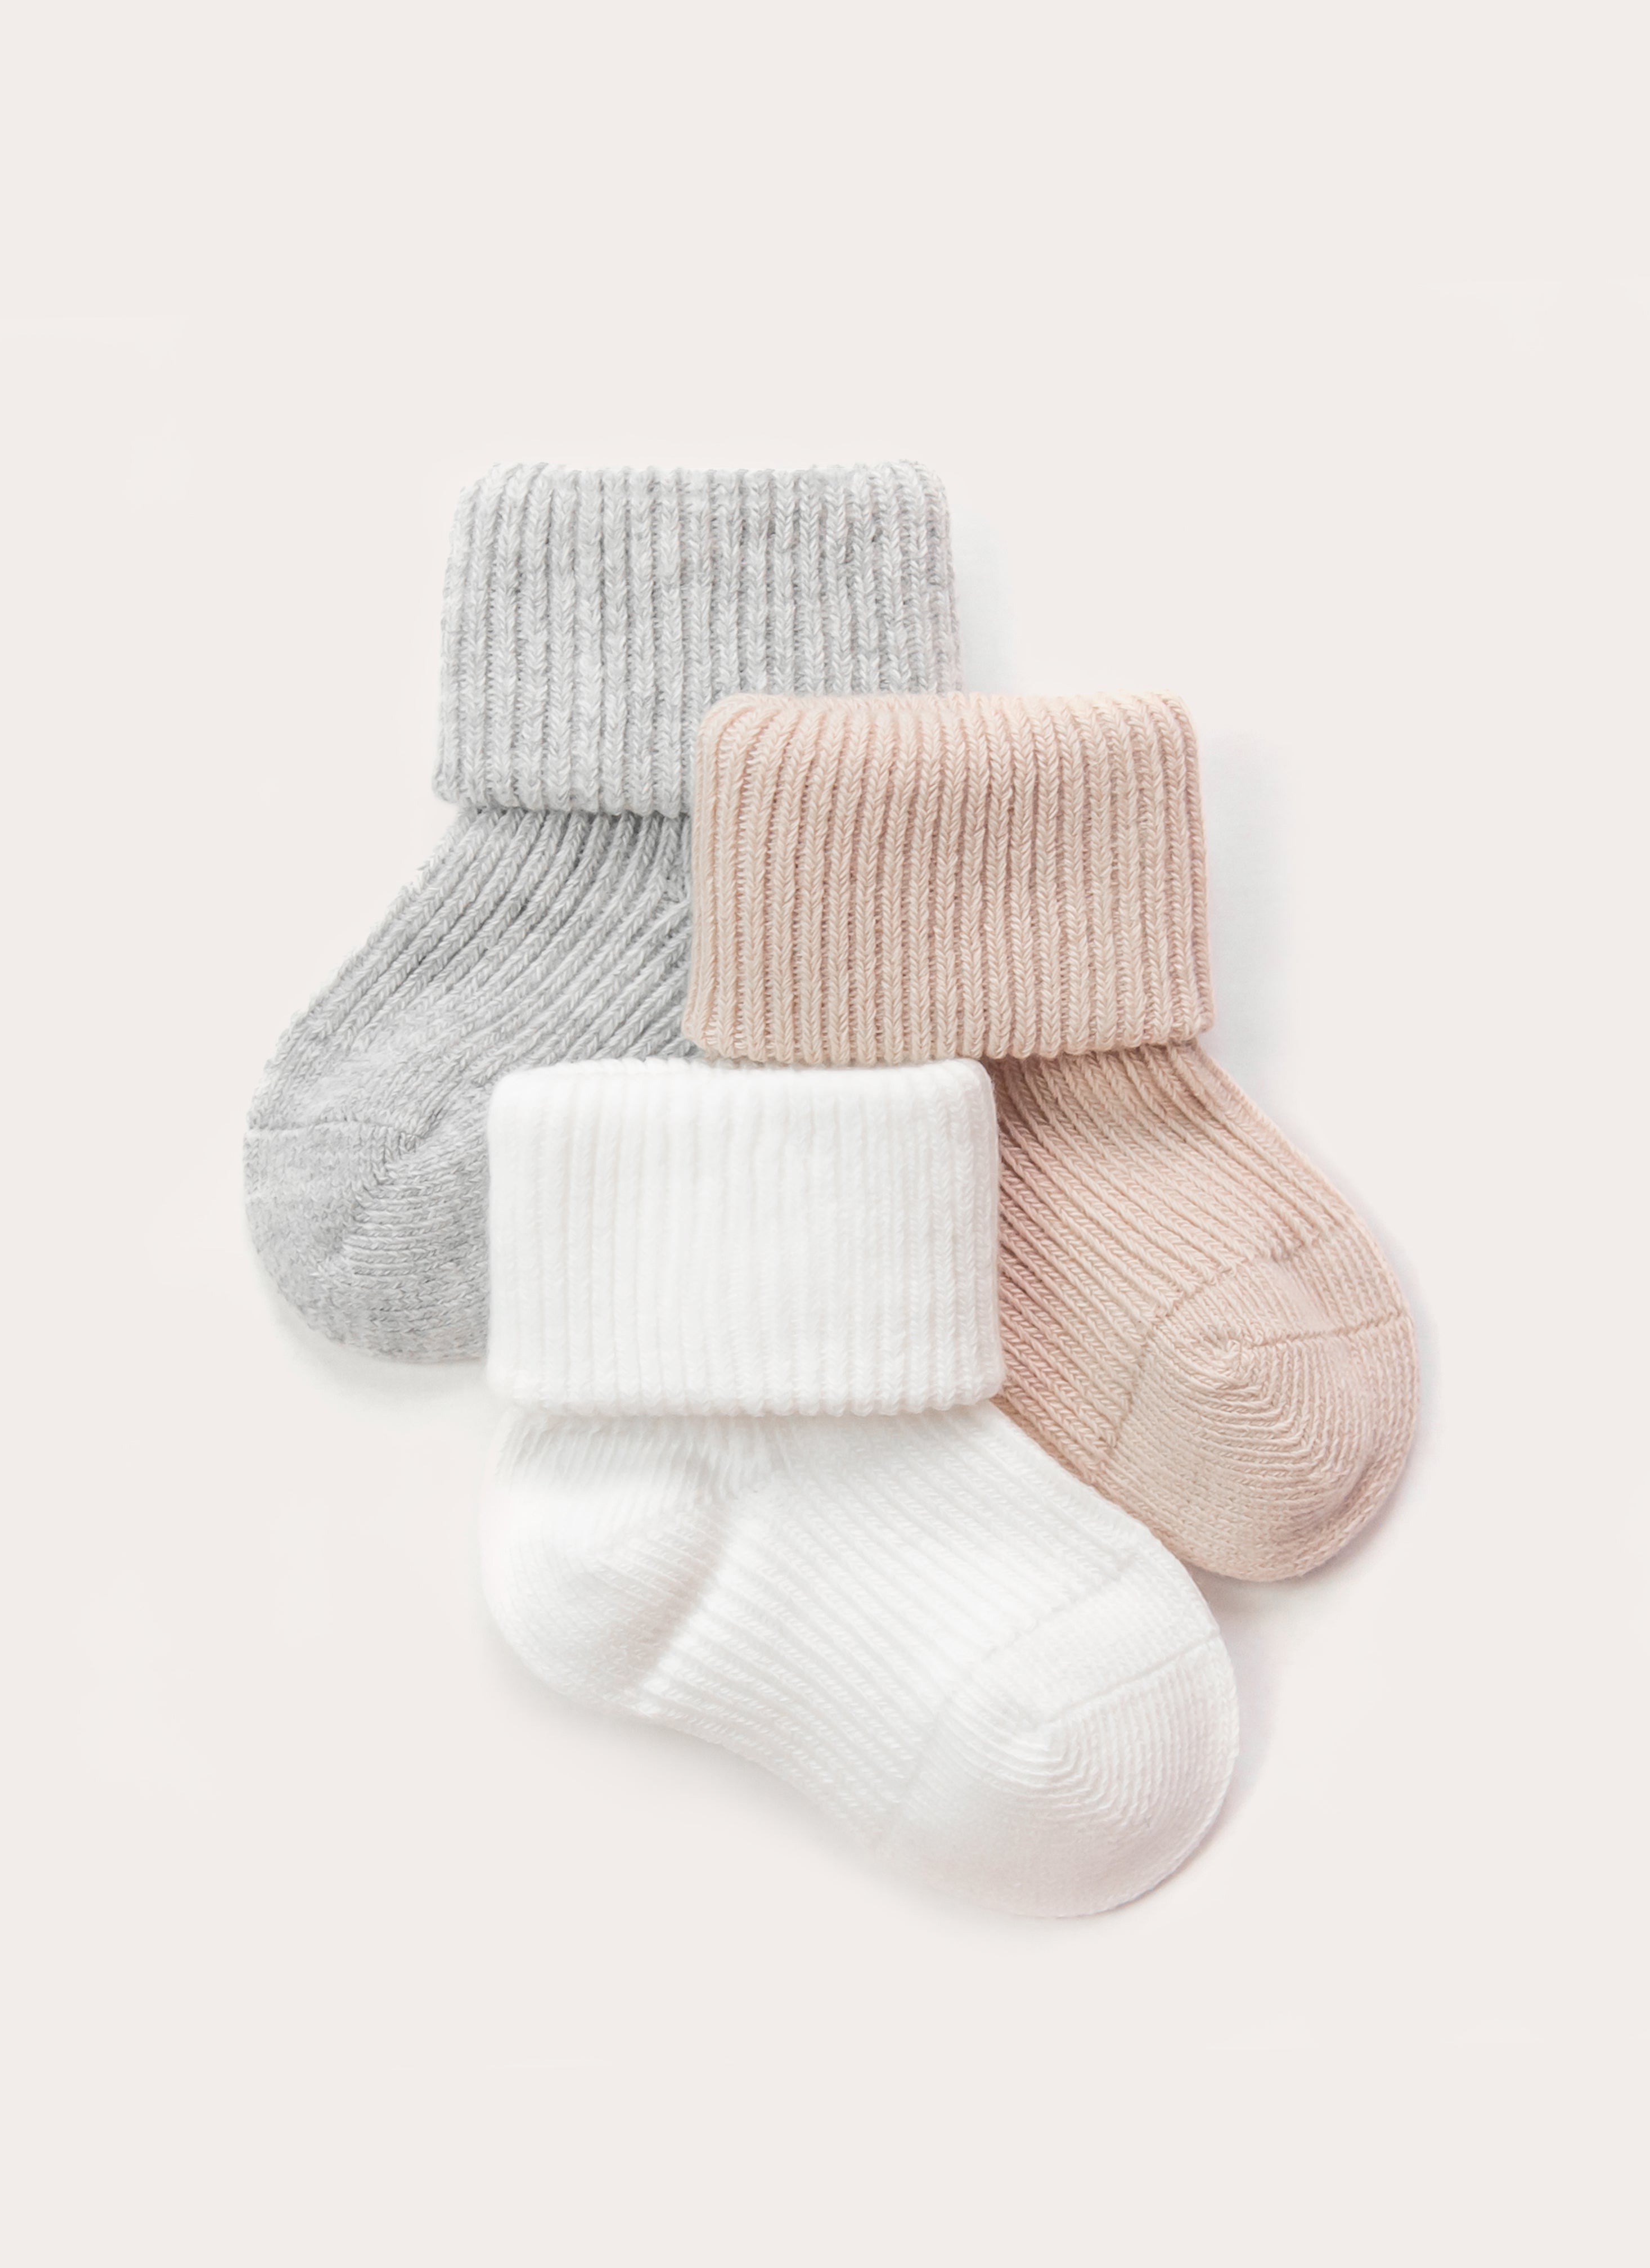 Soft Cotton Socks 3PC/set (Grey, Nude, White)